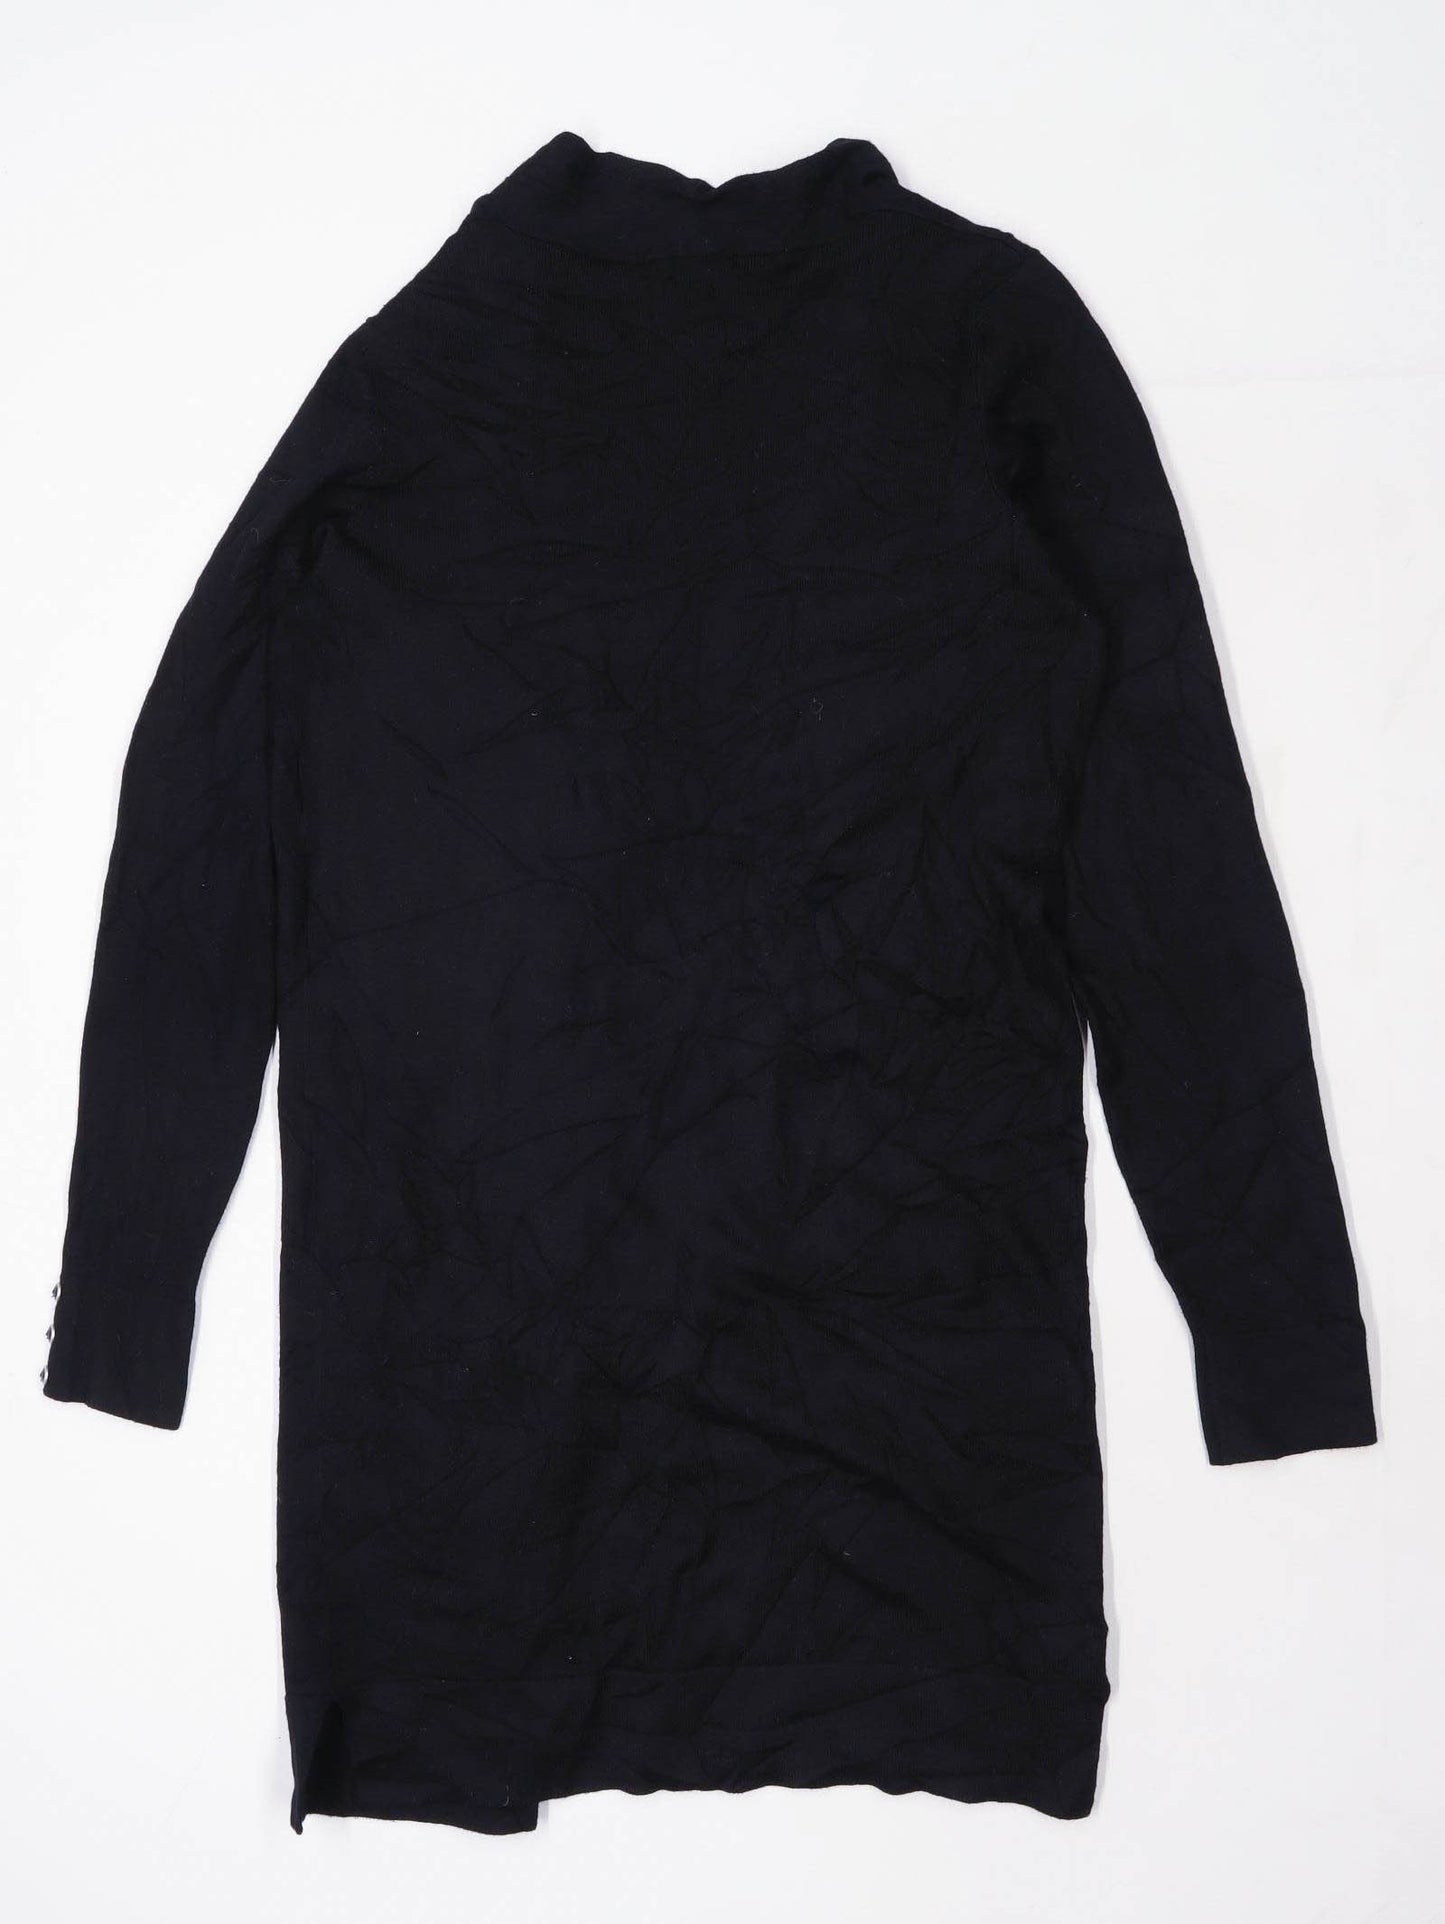 TU Womens Size 8 Cotton Blend Black Cardigan (Regular)